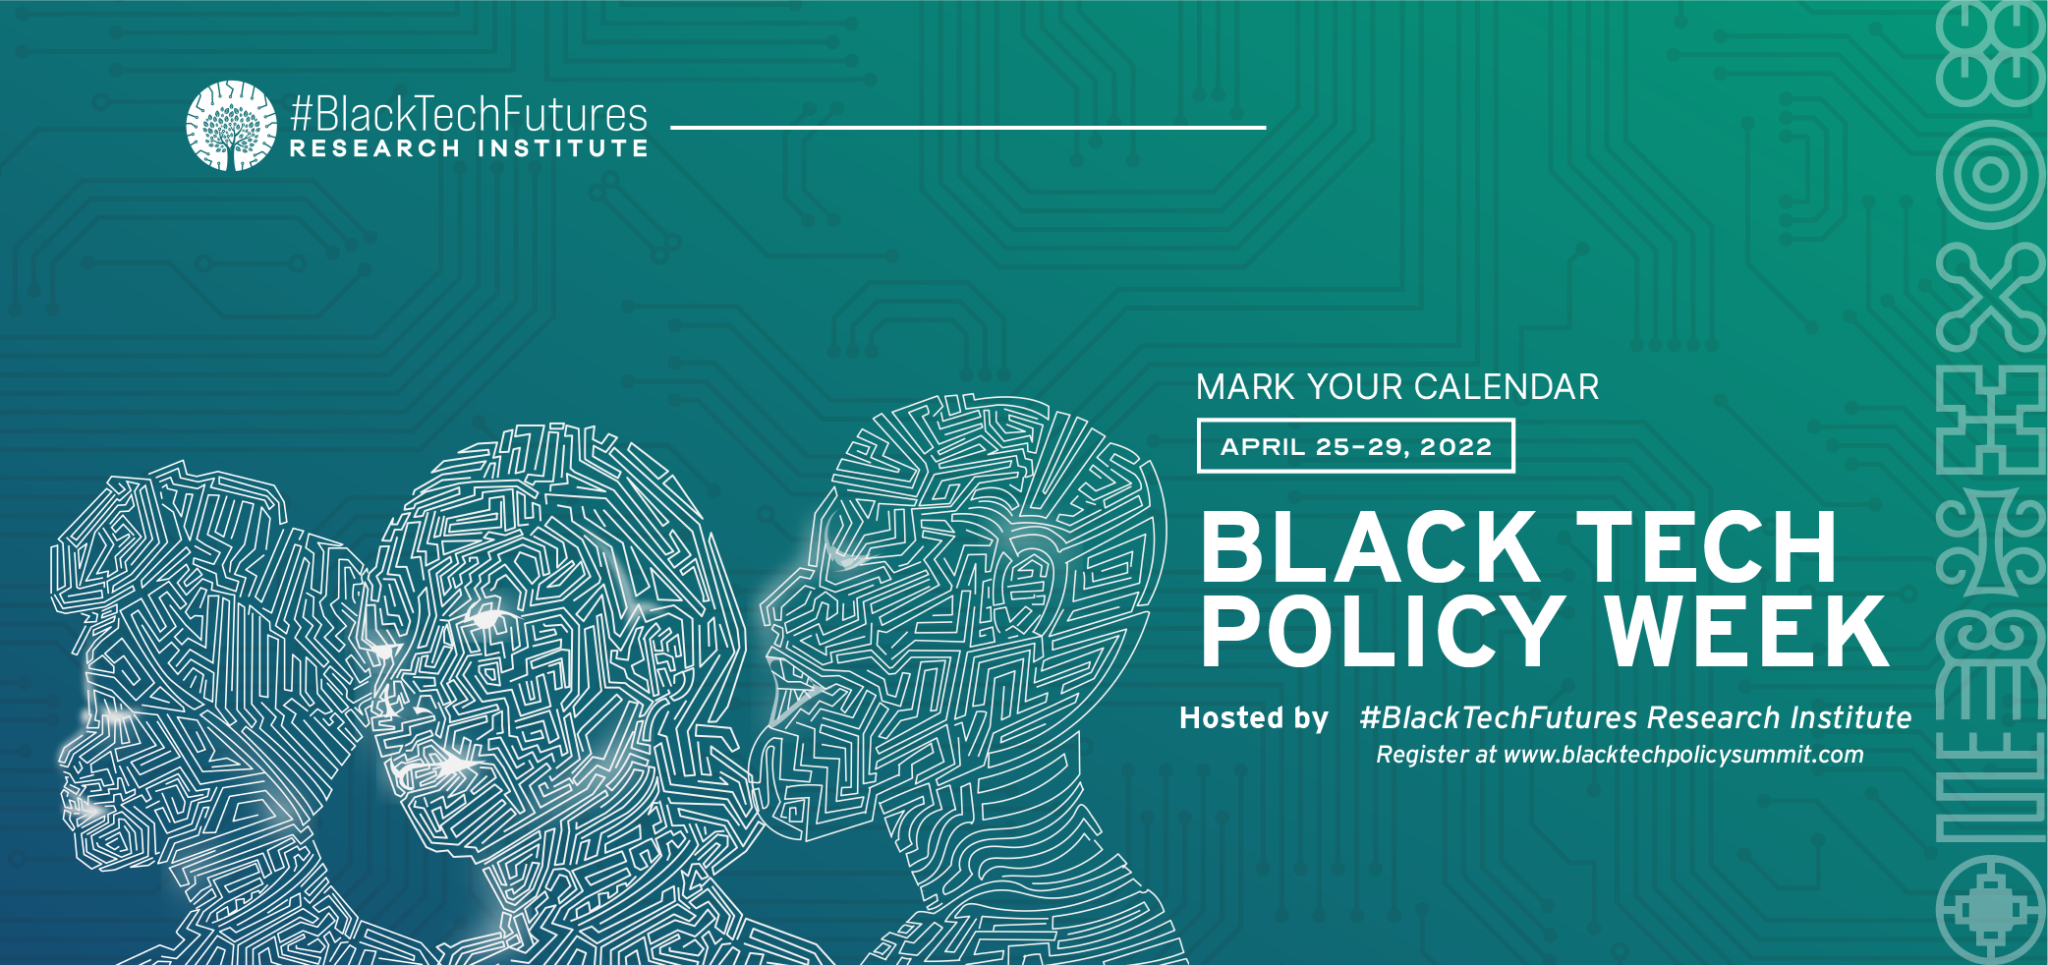 Stillman a premier partner for Black Tech Policy Week Stillman College